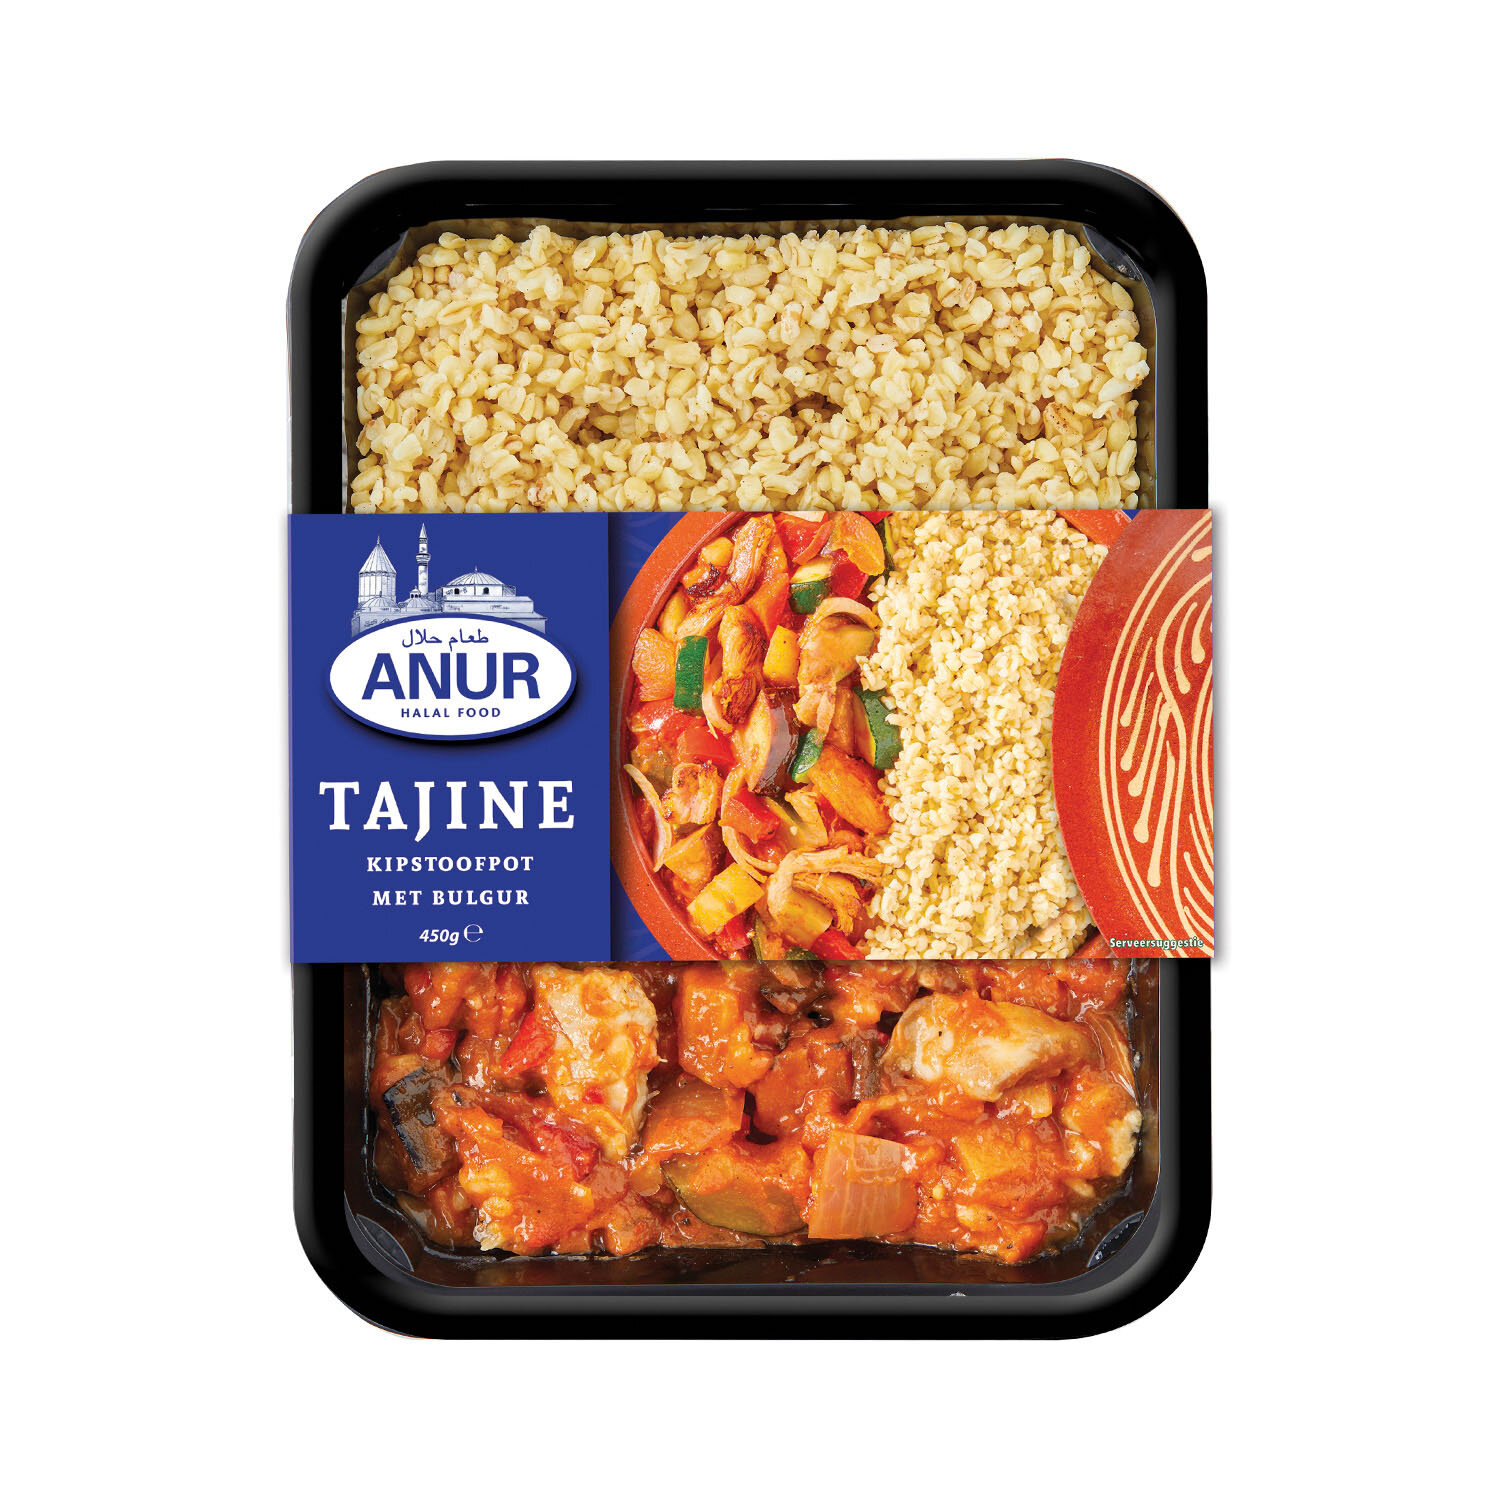 Tajine - Kipstoofpot met bulgur - ANUR Halal Food  (Copy)